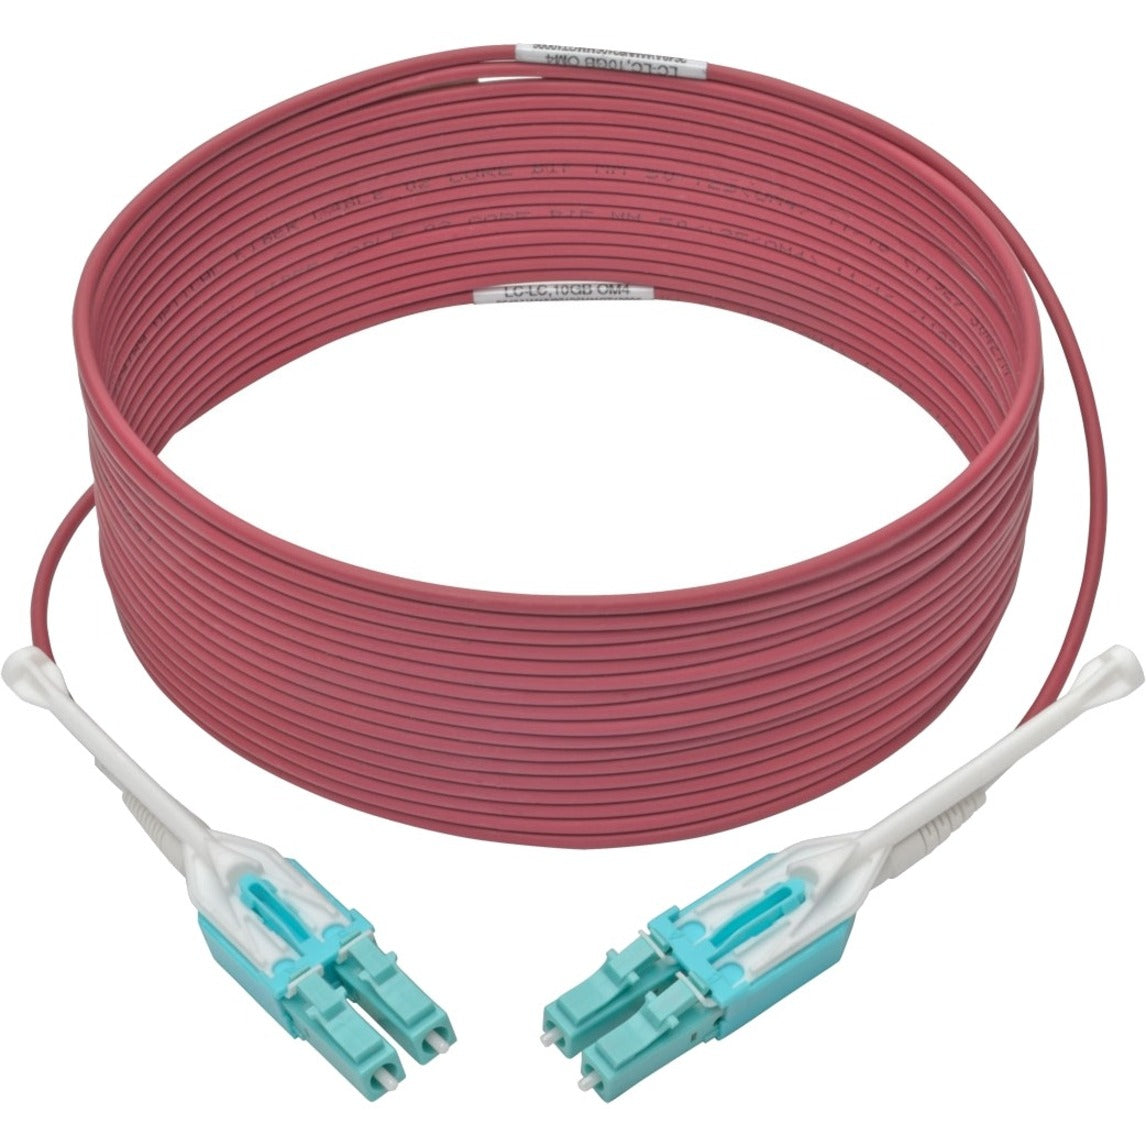 Tripp Lite N821-06M-MG-T Fiber Optic Network Cable, 19.70 ft, Multi-mode, 100 Gbit/s, Magenta